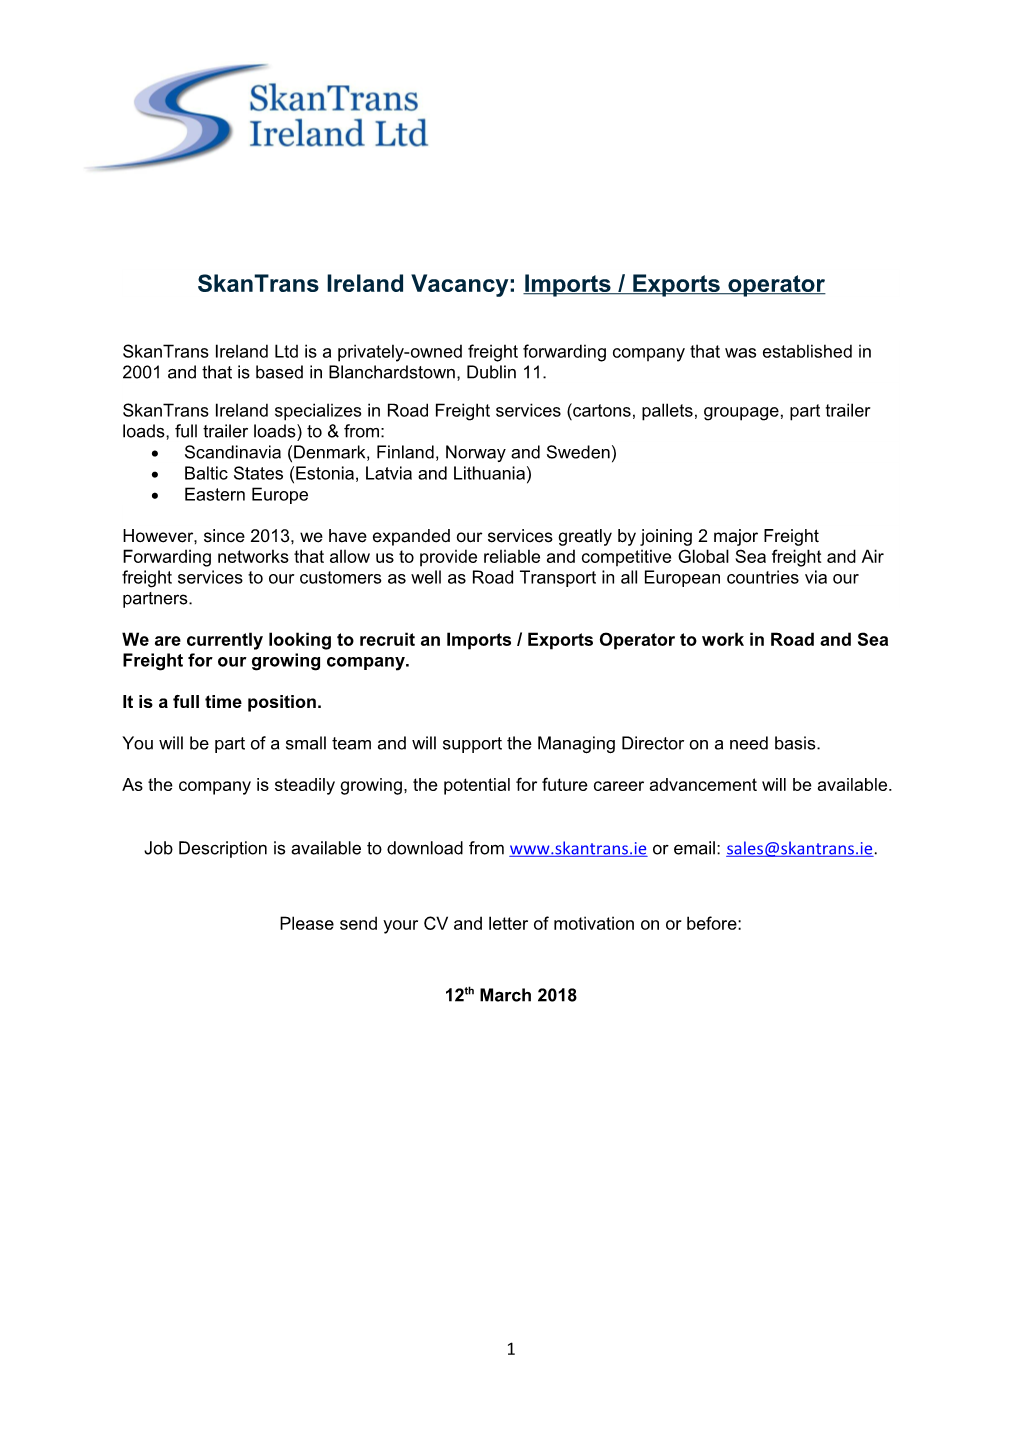 Skantrans Ireland Vacancy: Imports / Exports Operator